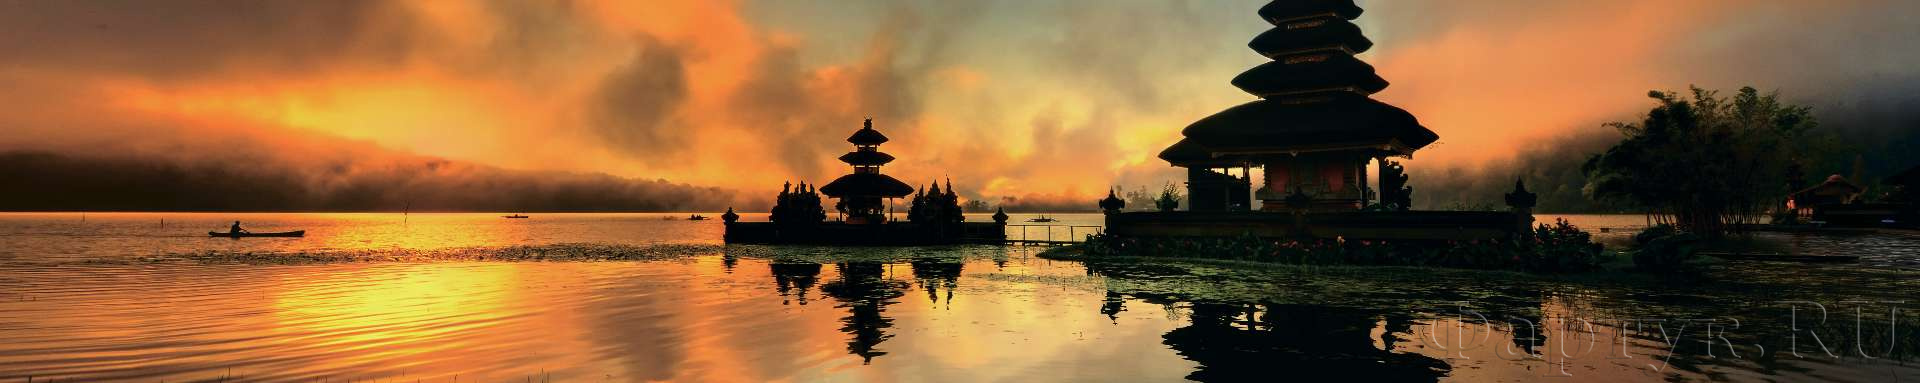 Храм на воде, Индонезия